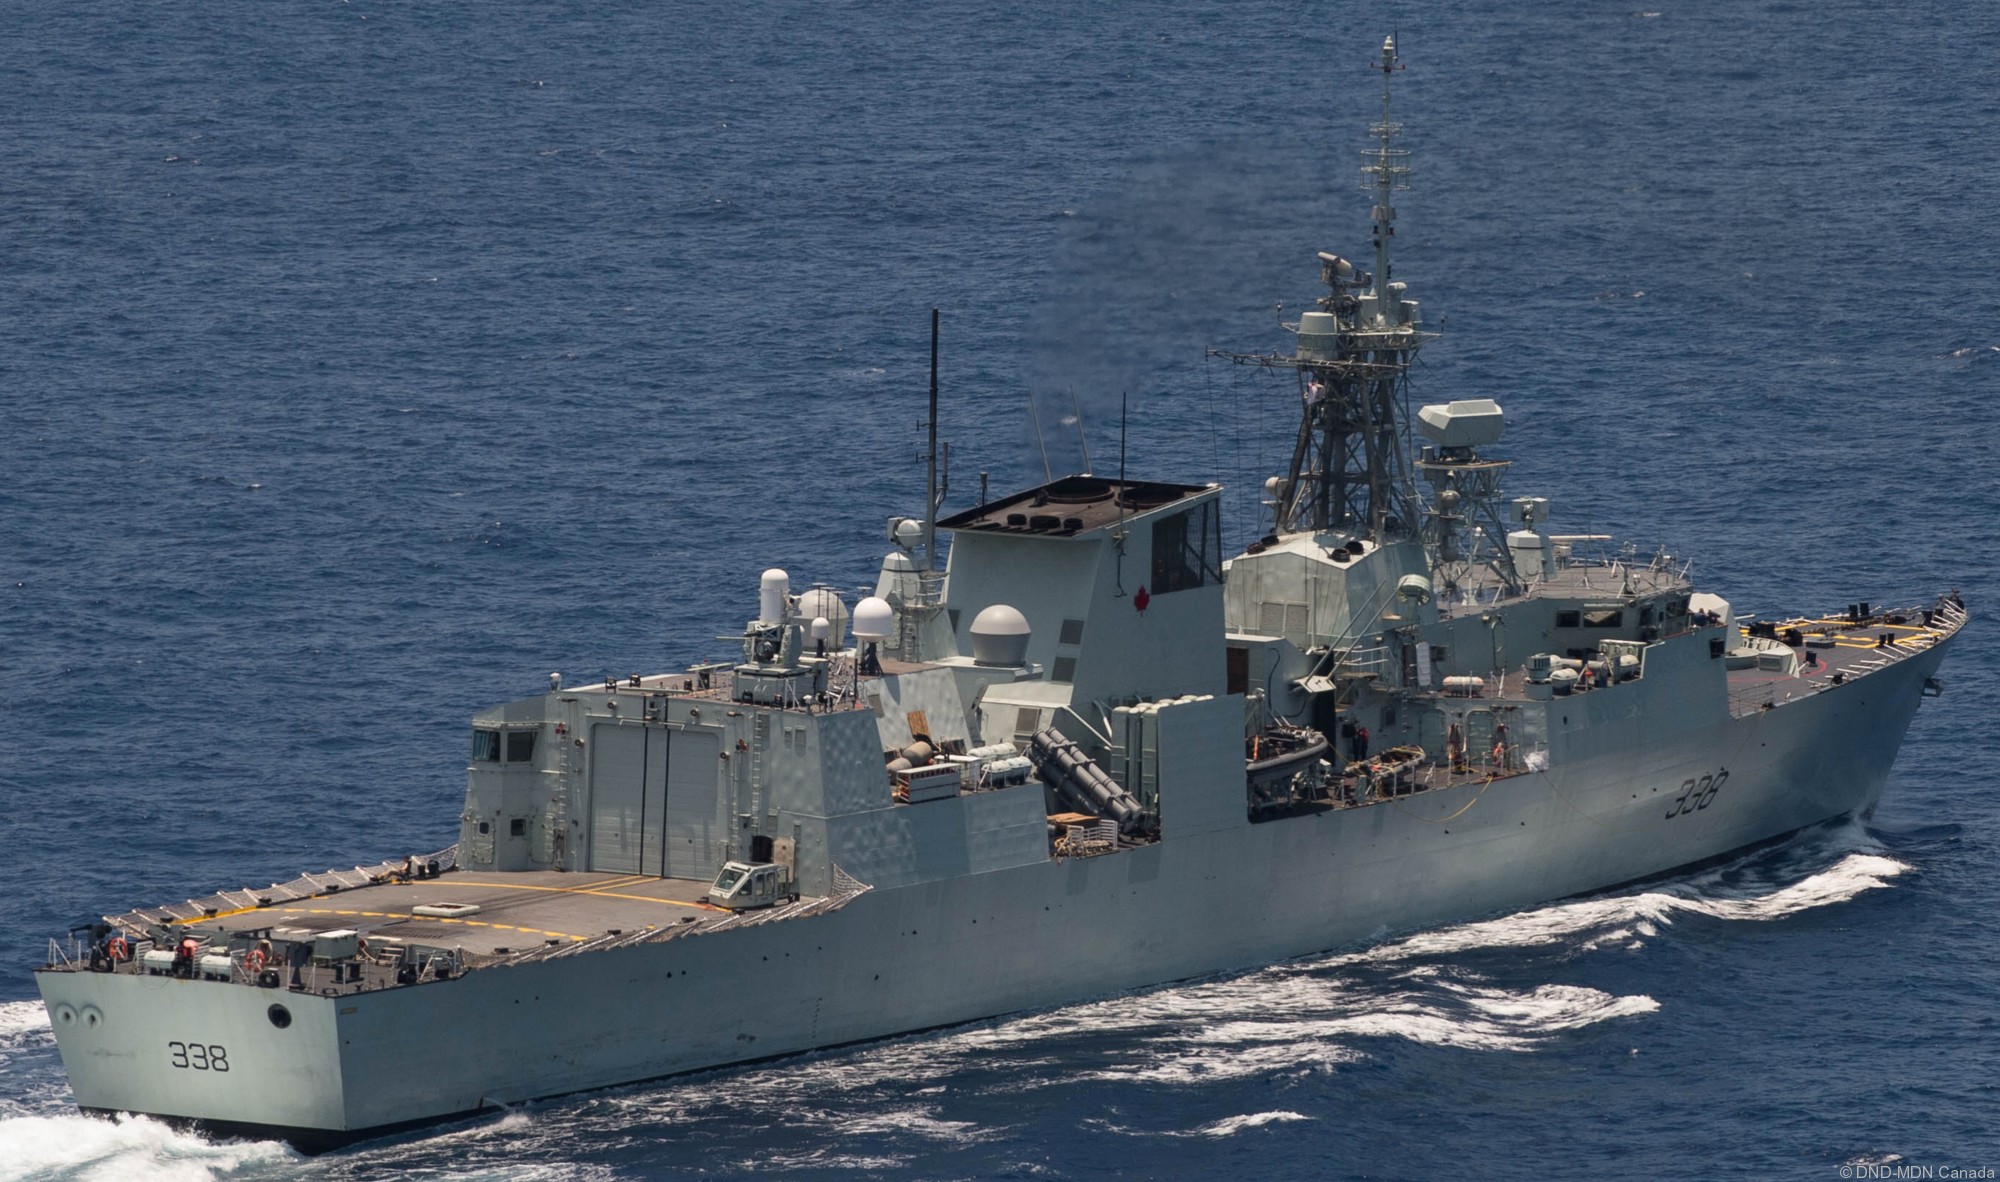 ffh-338 hmcs winnipeg halifax class helicopter patrol frigate ncsm royal canadian navy 59